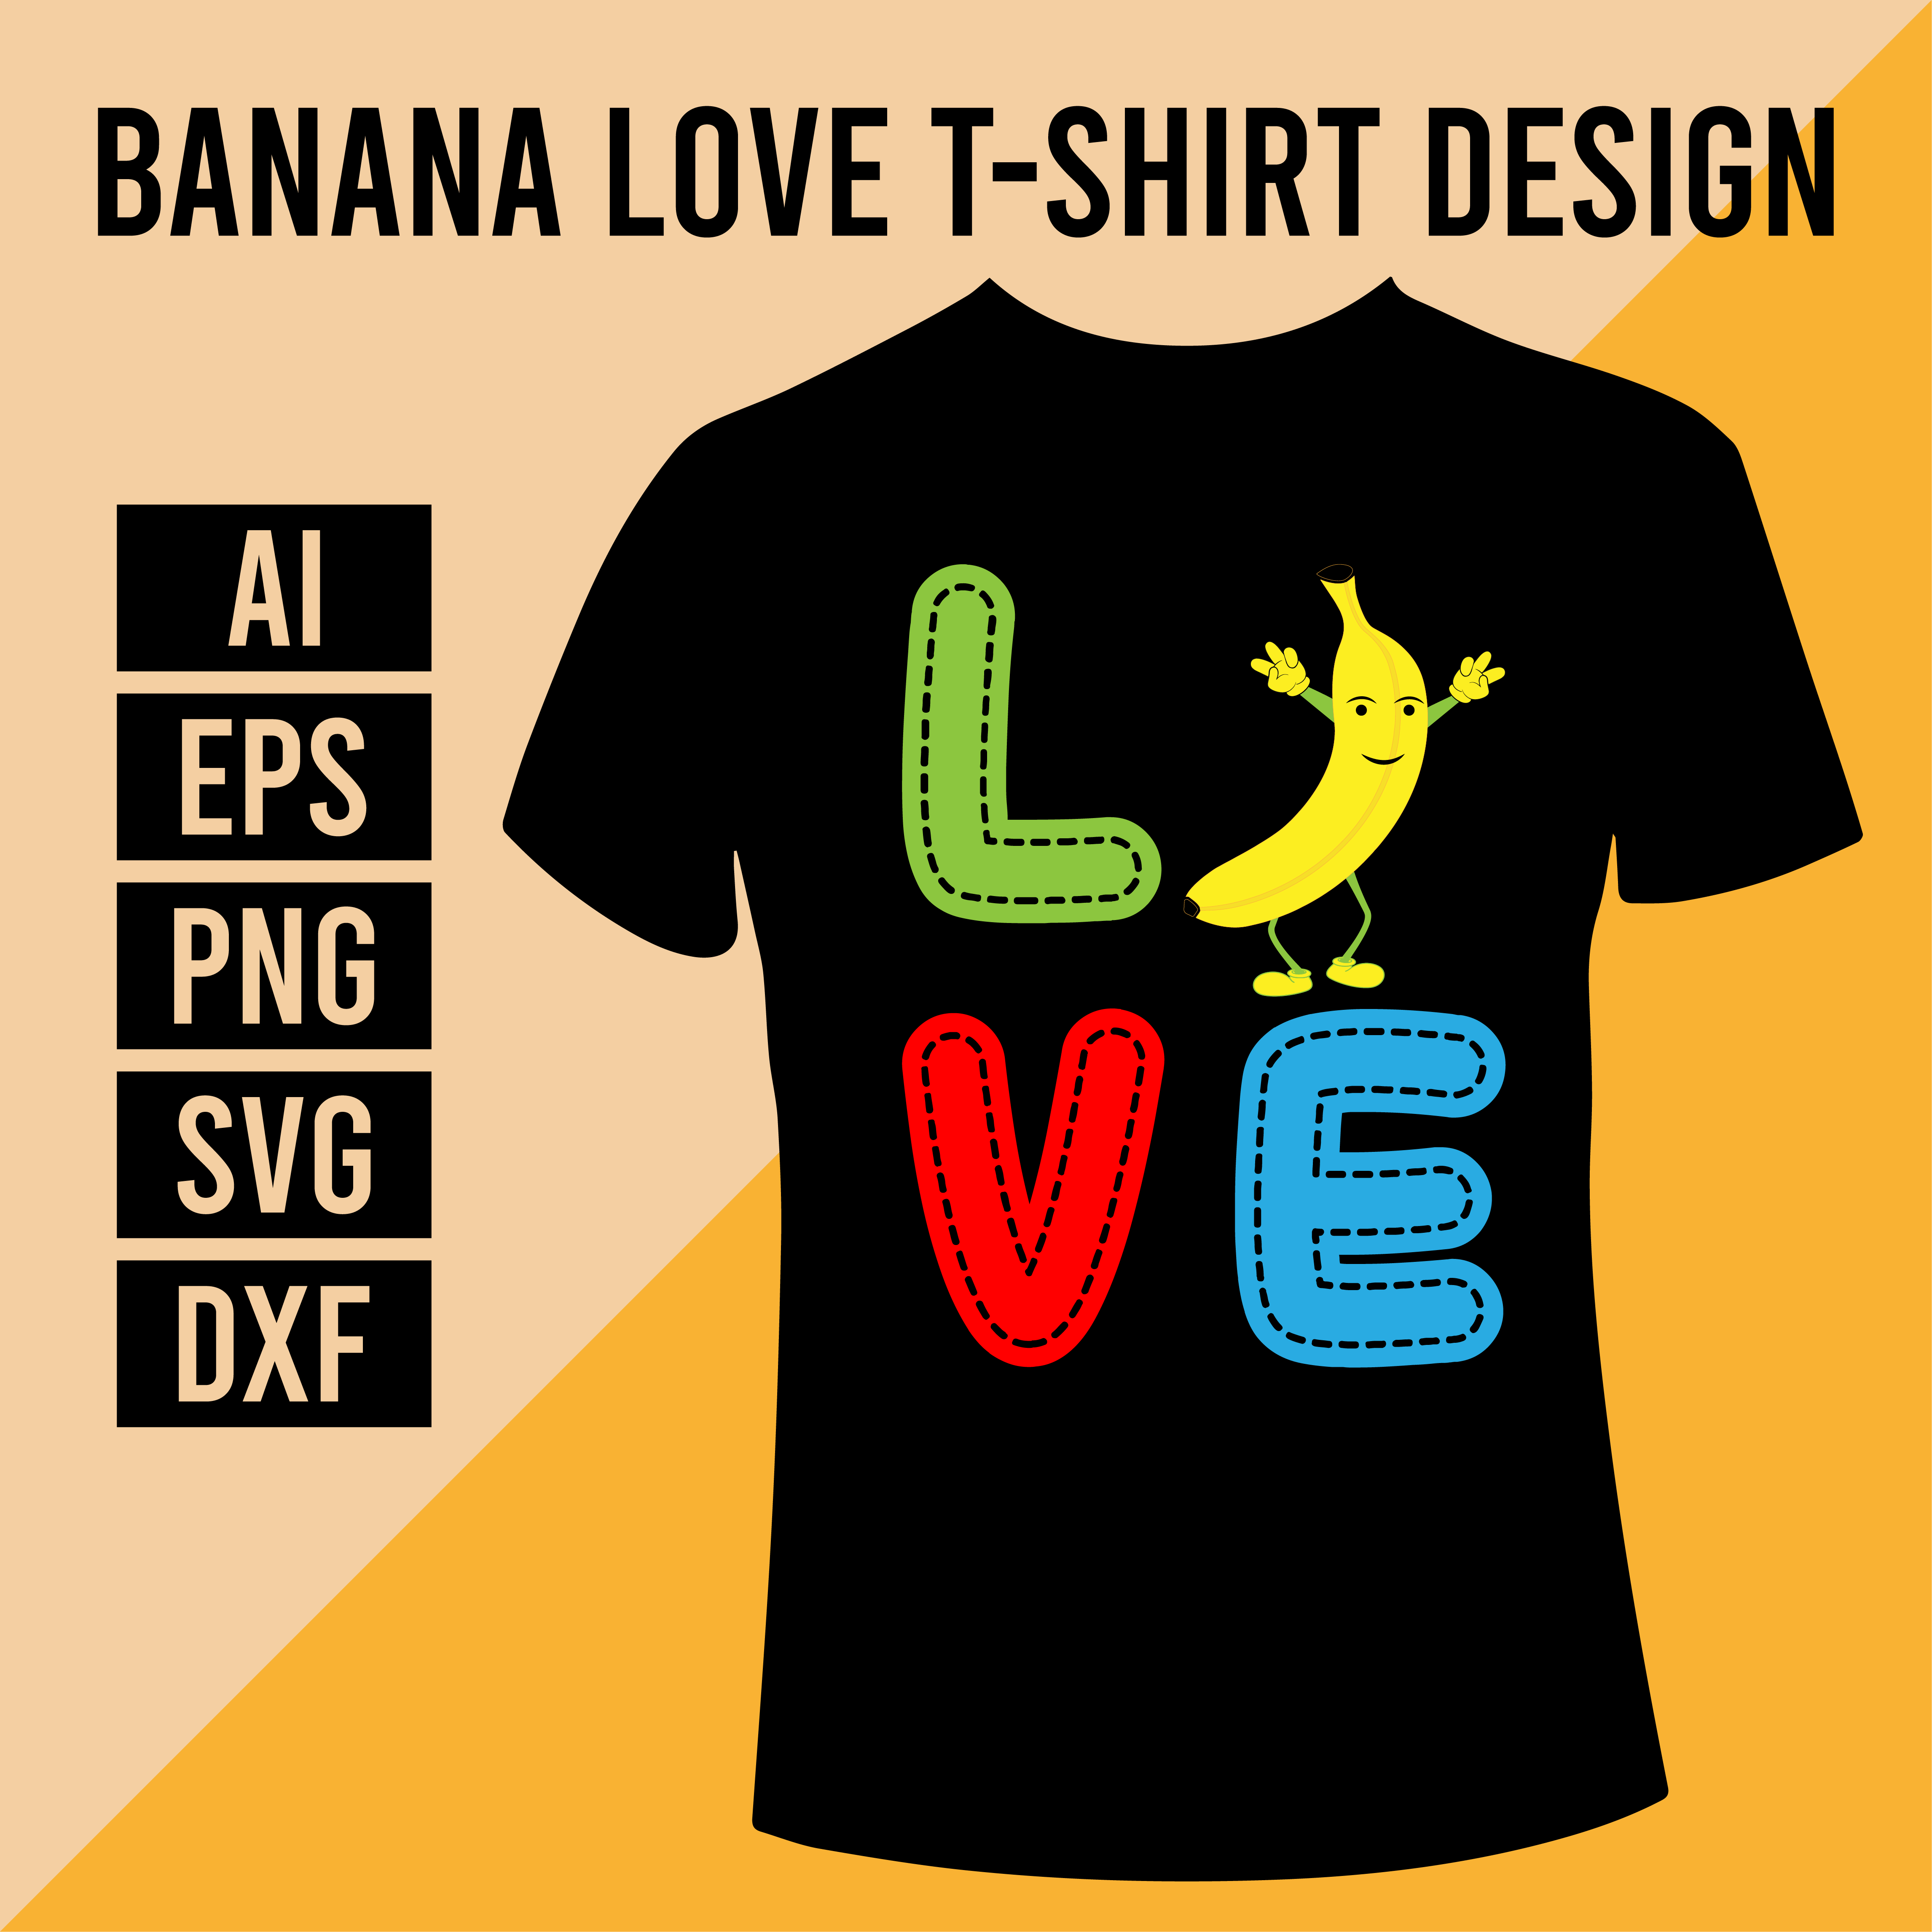 Banana Love T-Shirt Design cover image.